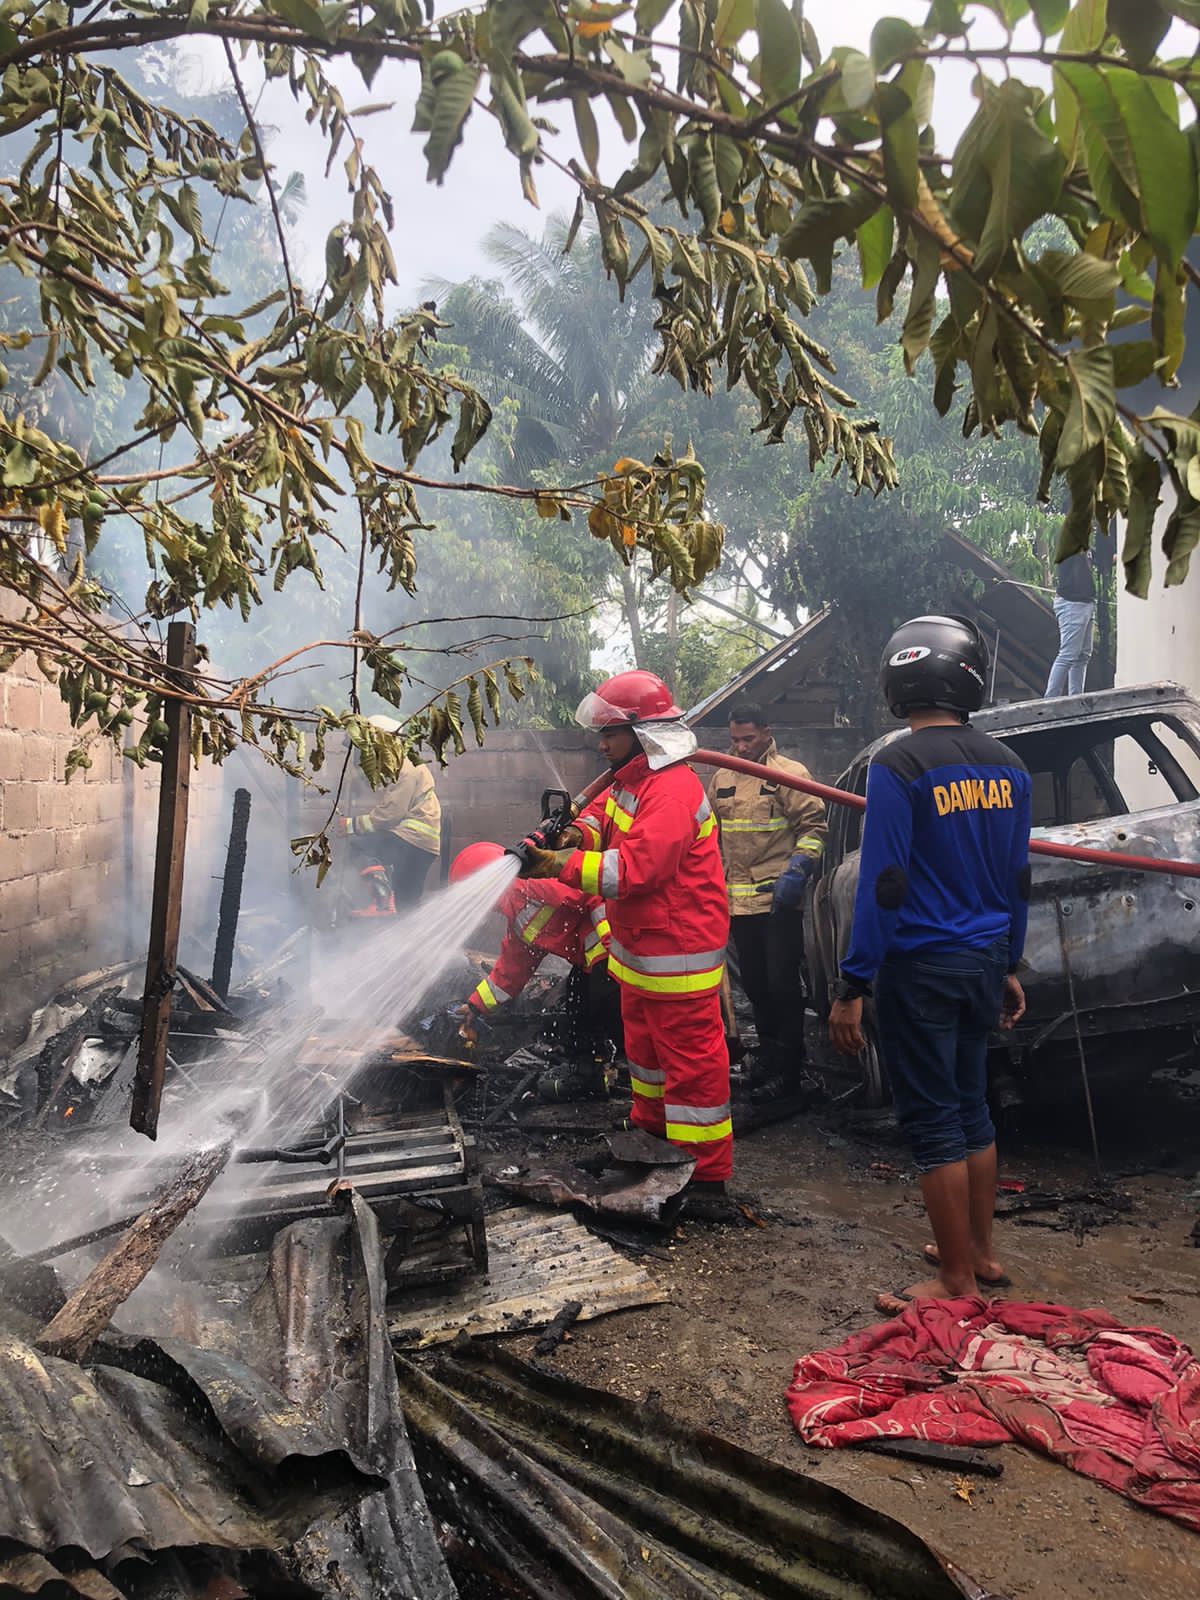 Mobil Avanza terbakar di Aceh Besar